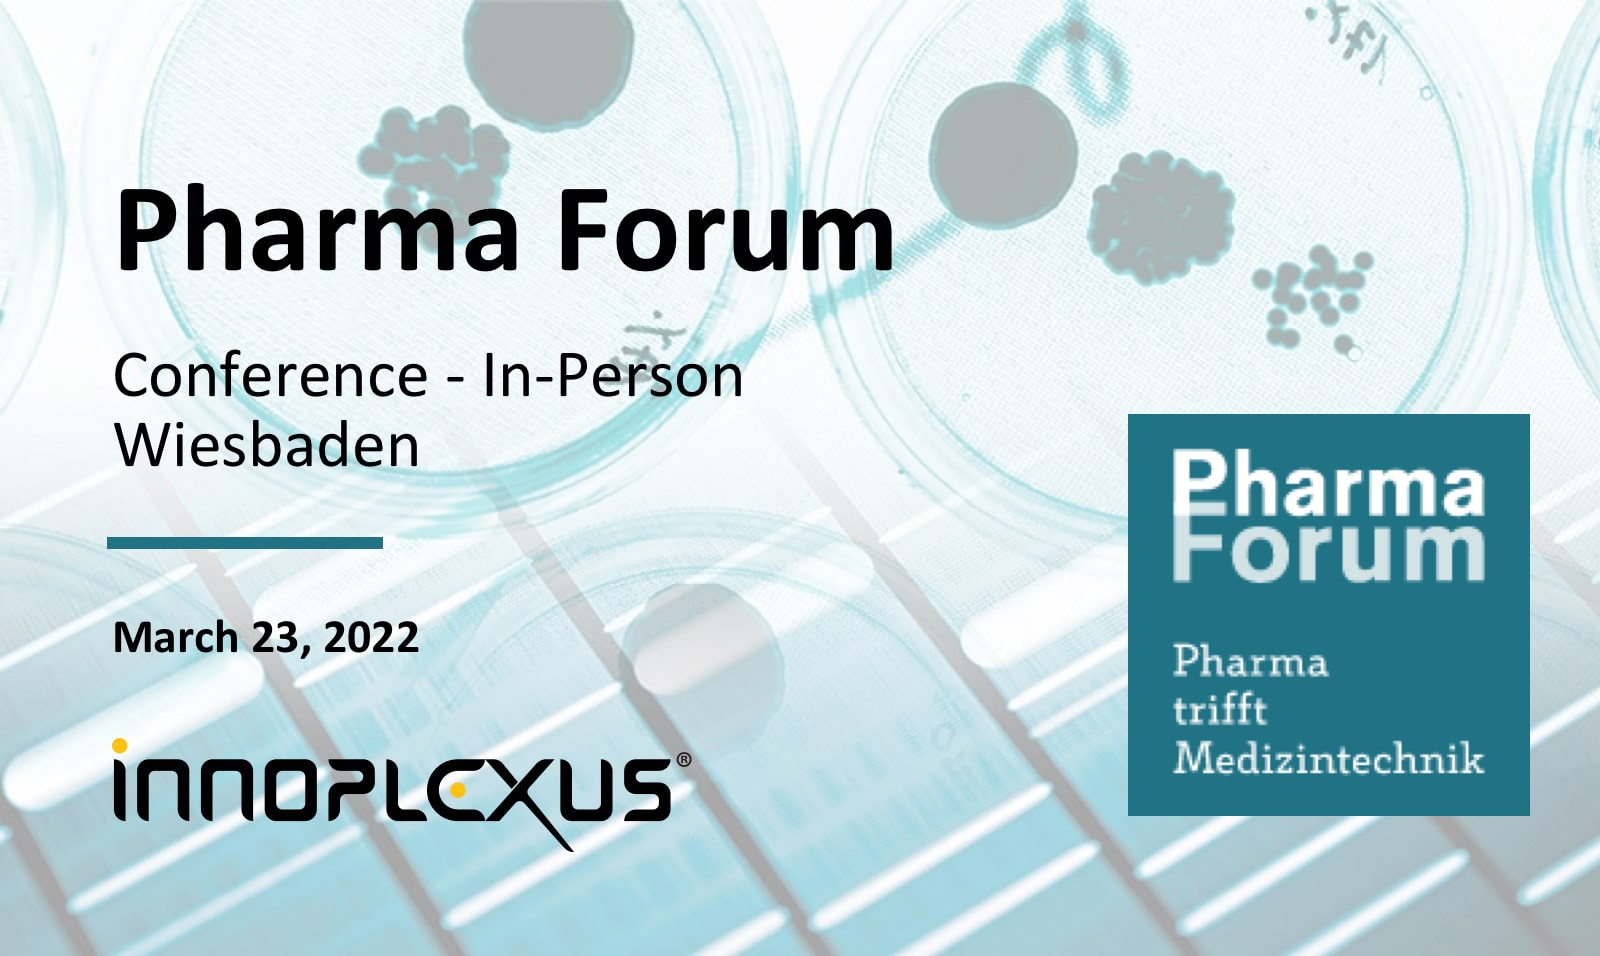 Pharma Forum